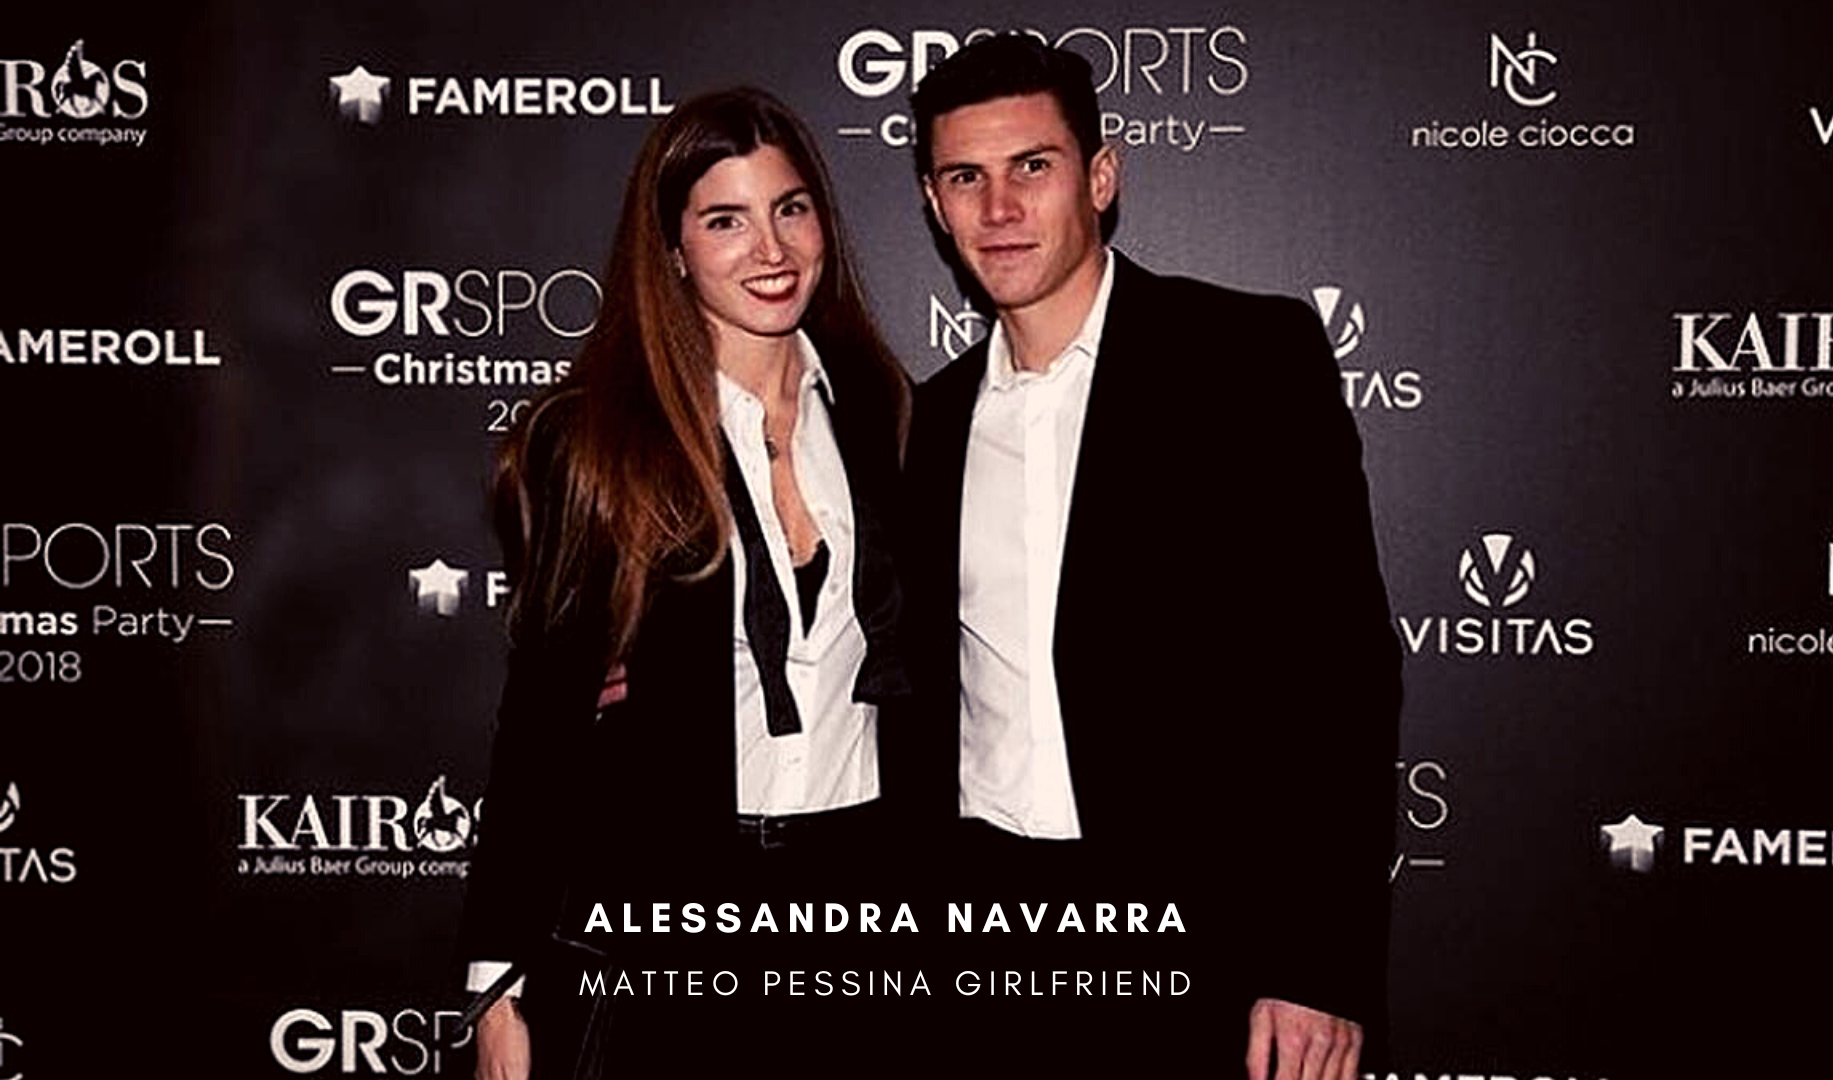 Matteo Pessina with his girlfriend Alessandra Navarra. (Credit: Instagram)